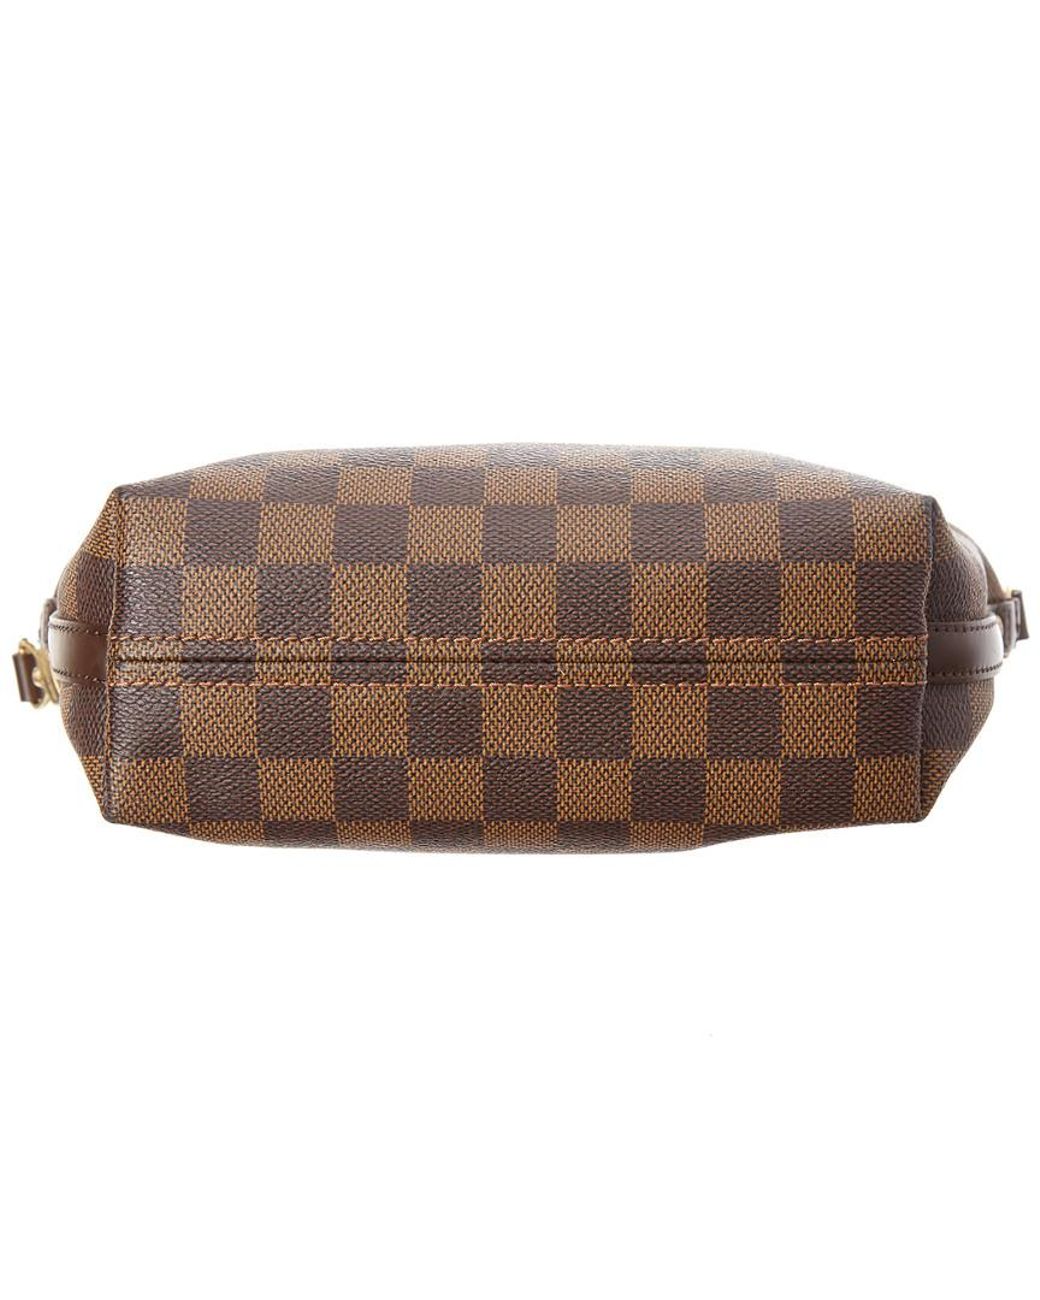 Vintage Louis Vuitton Illovo Damier Ebene MM Shoulder Bag